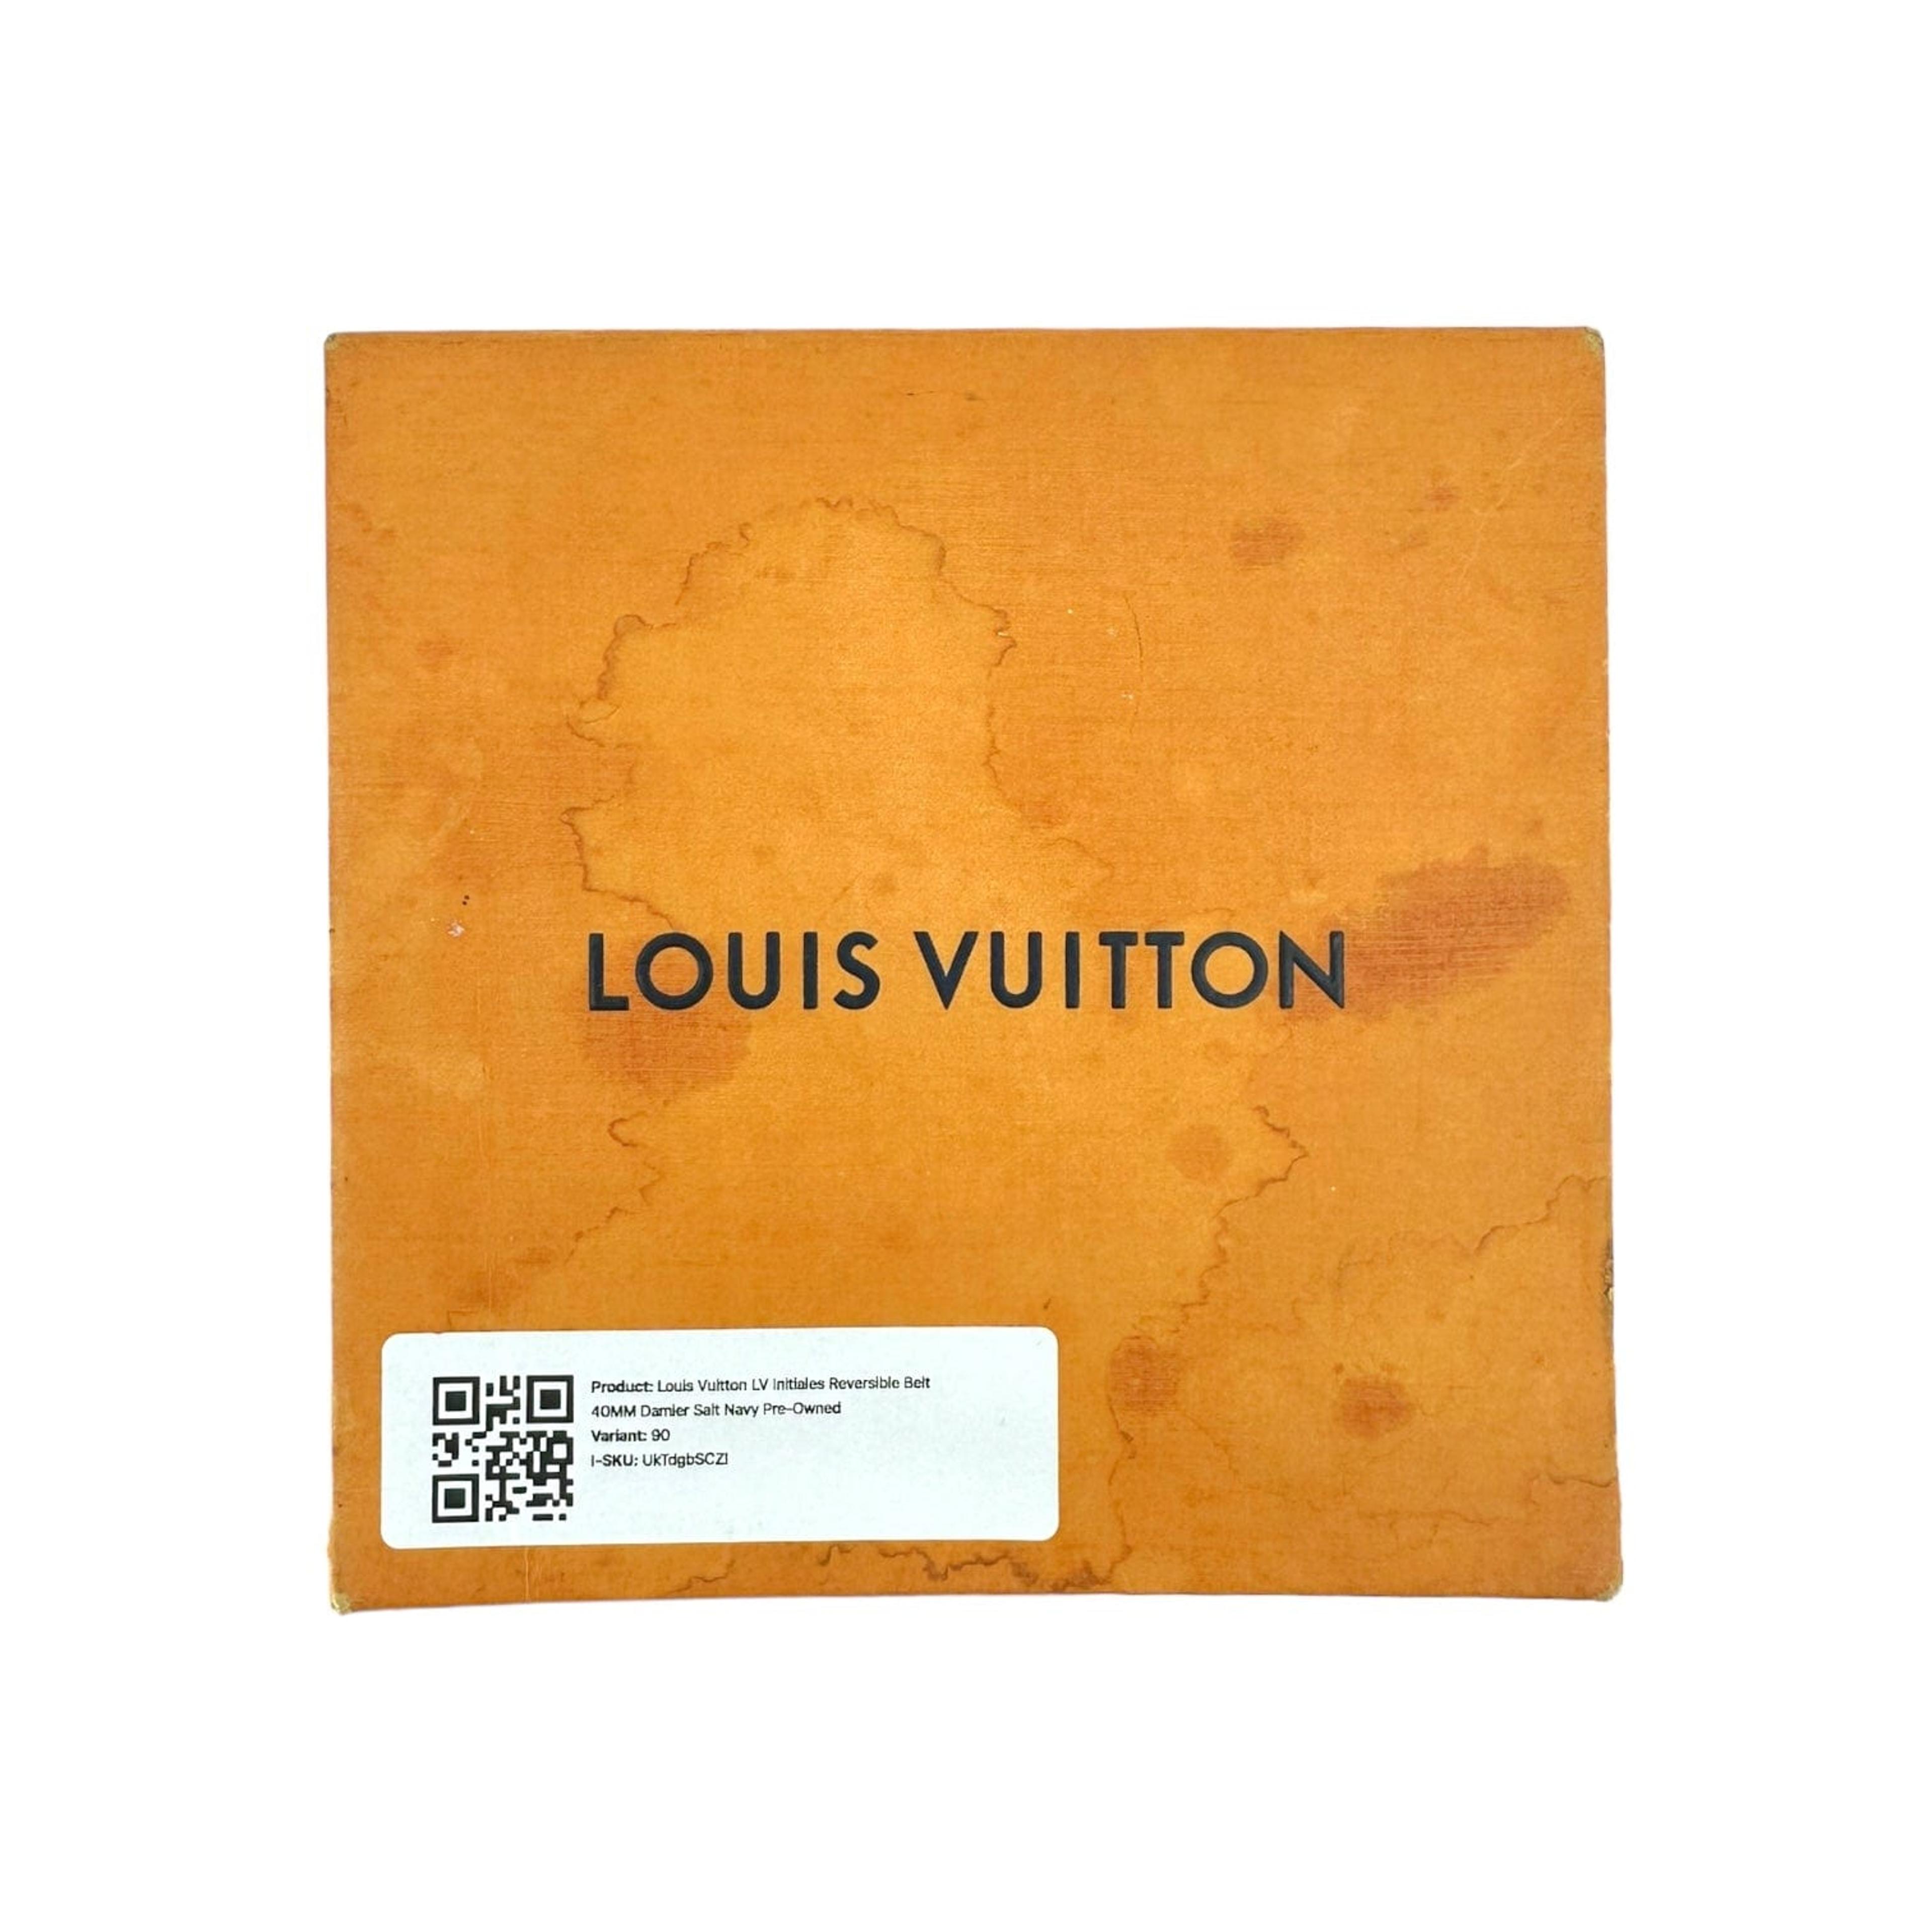 Alternate View 5 of Louis Vuitton LV Initiales Reversible Belt 40MM Damier Salt Navy